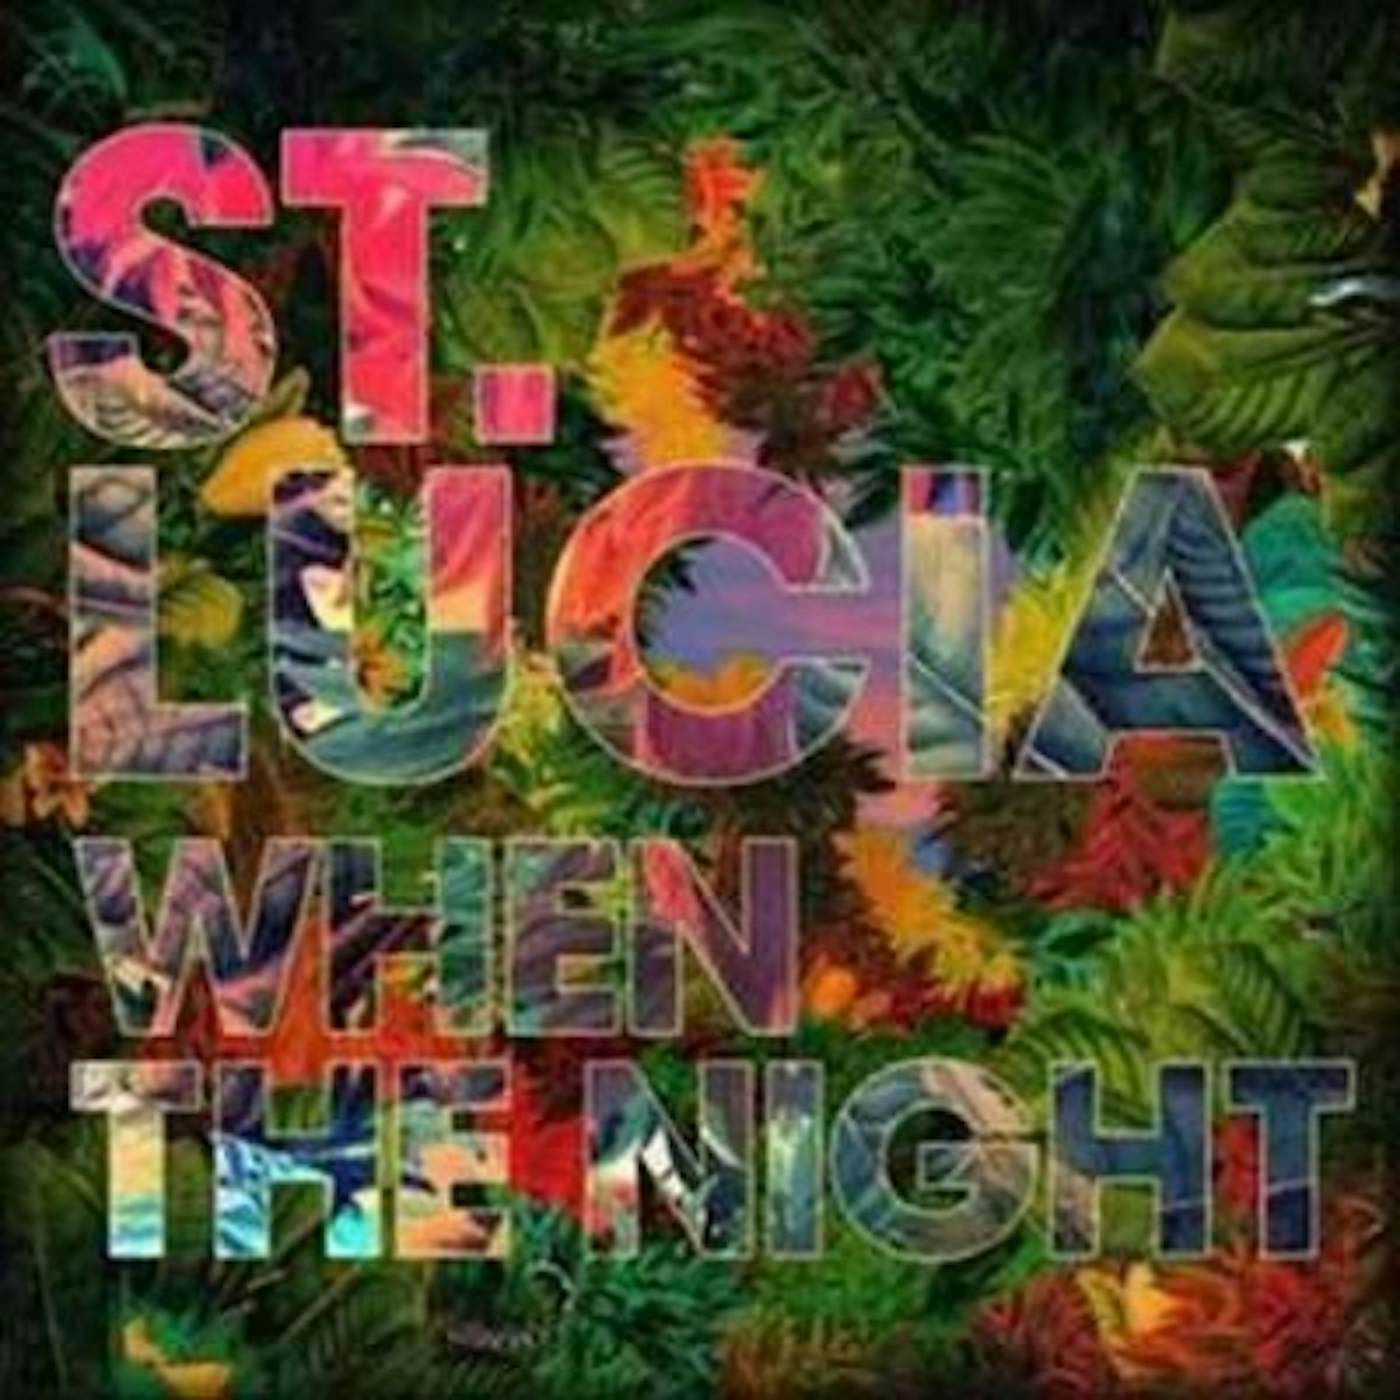 St. Lucia When The Night Vinyl Record